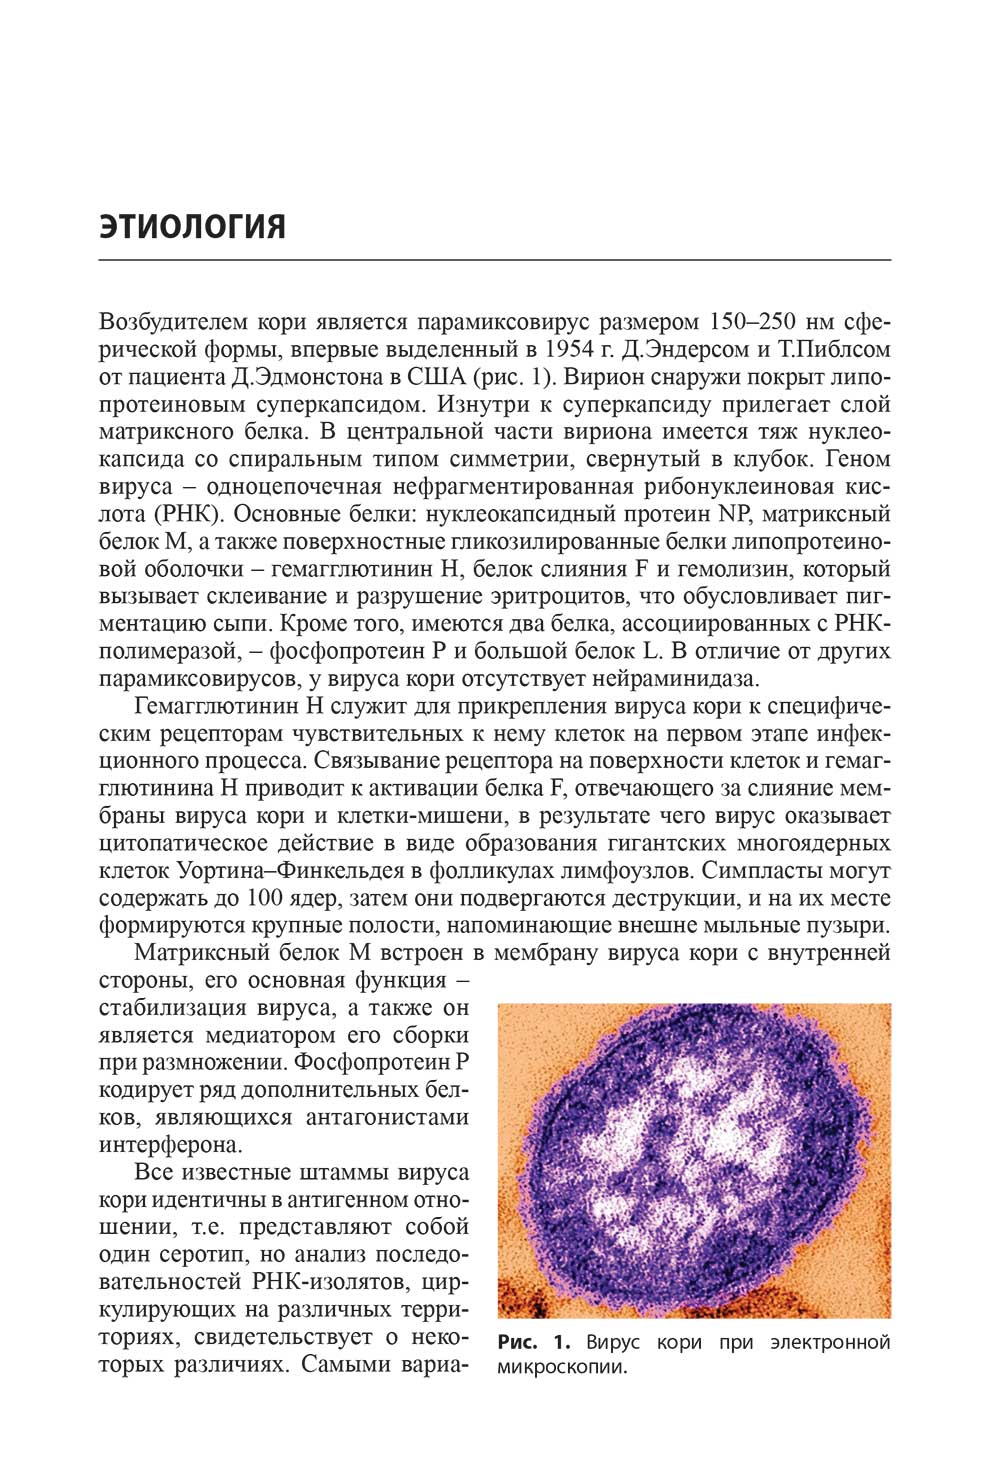 Рис. 1. Вирус кори при электронной микроскопии.